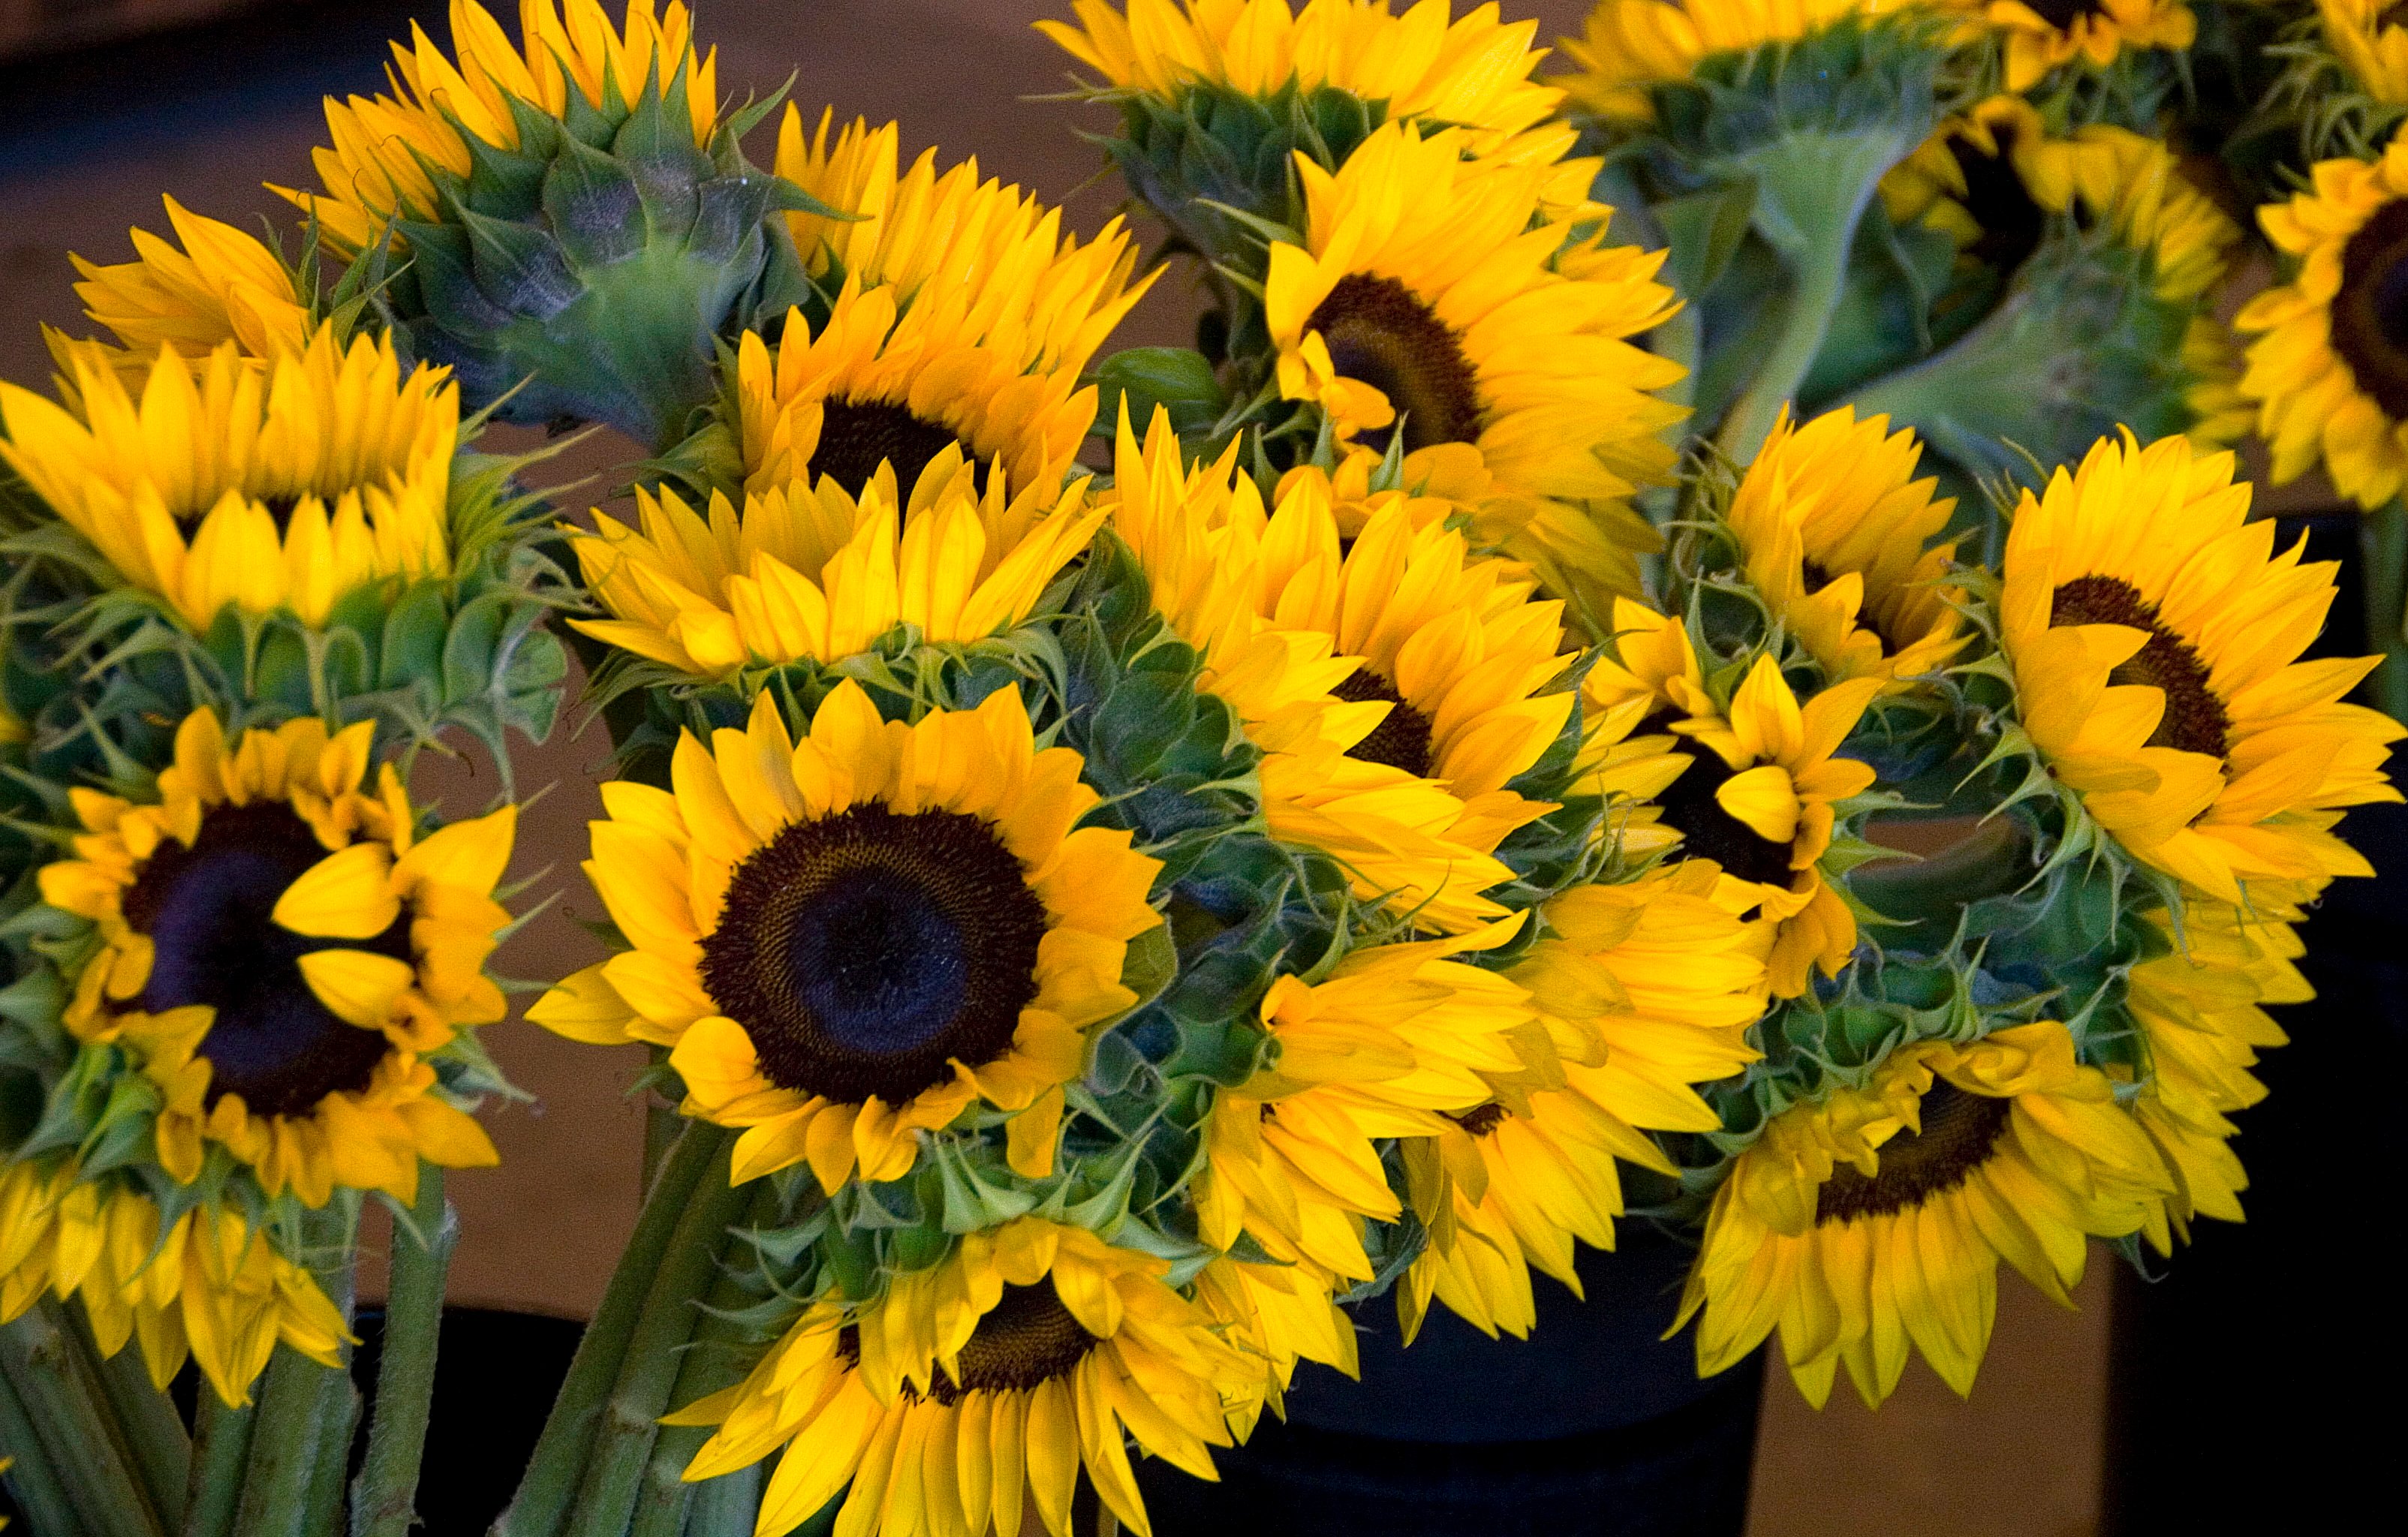 Arrange of sunflower in vase closeup photo HD wallpaper